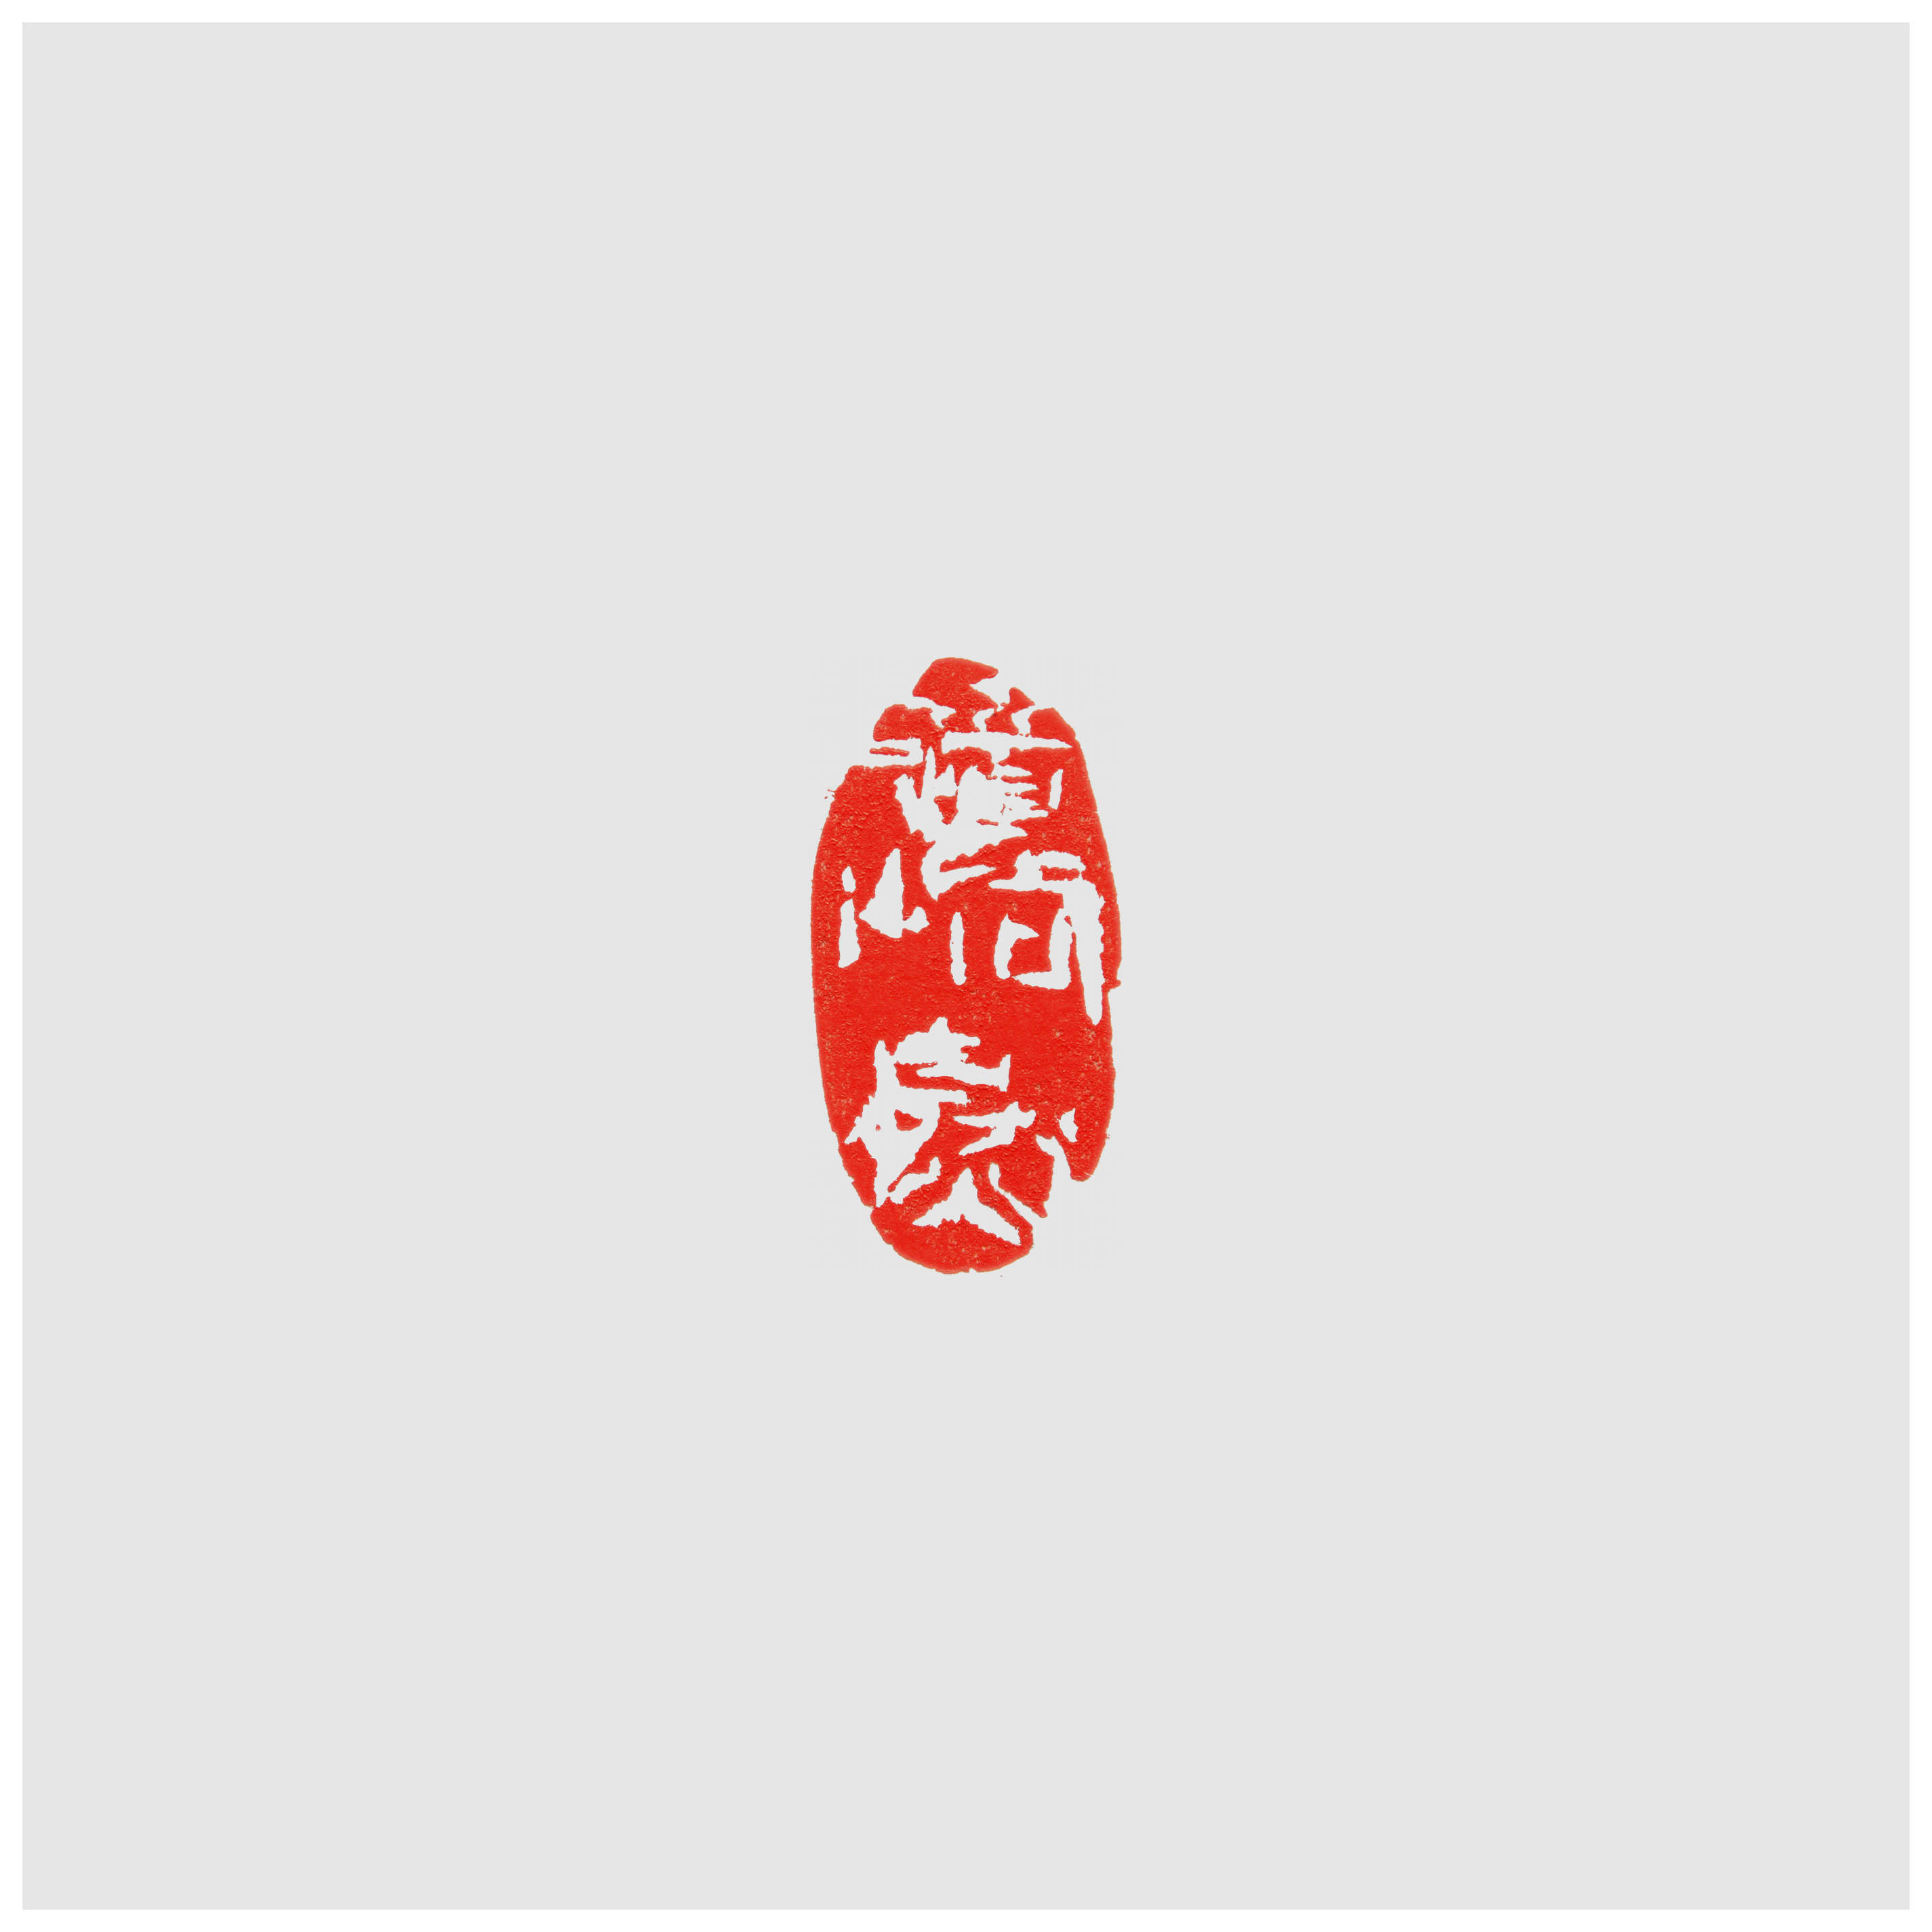 Qi Hong (Sai Koh) 's freehand brushwork style semi-seal script leisure seal carving (Chinese seal engraving, seal cutting) imprint: Follows Nature, 35mm, natural stone